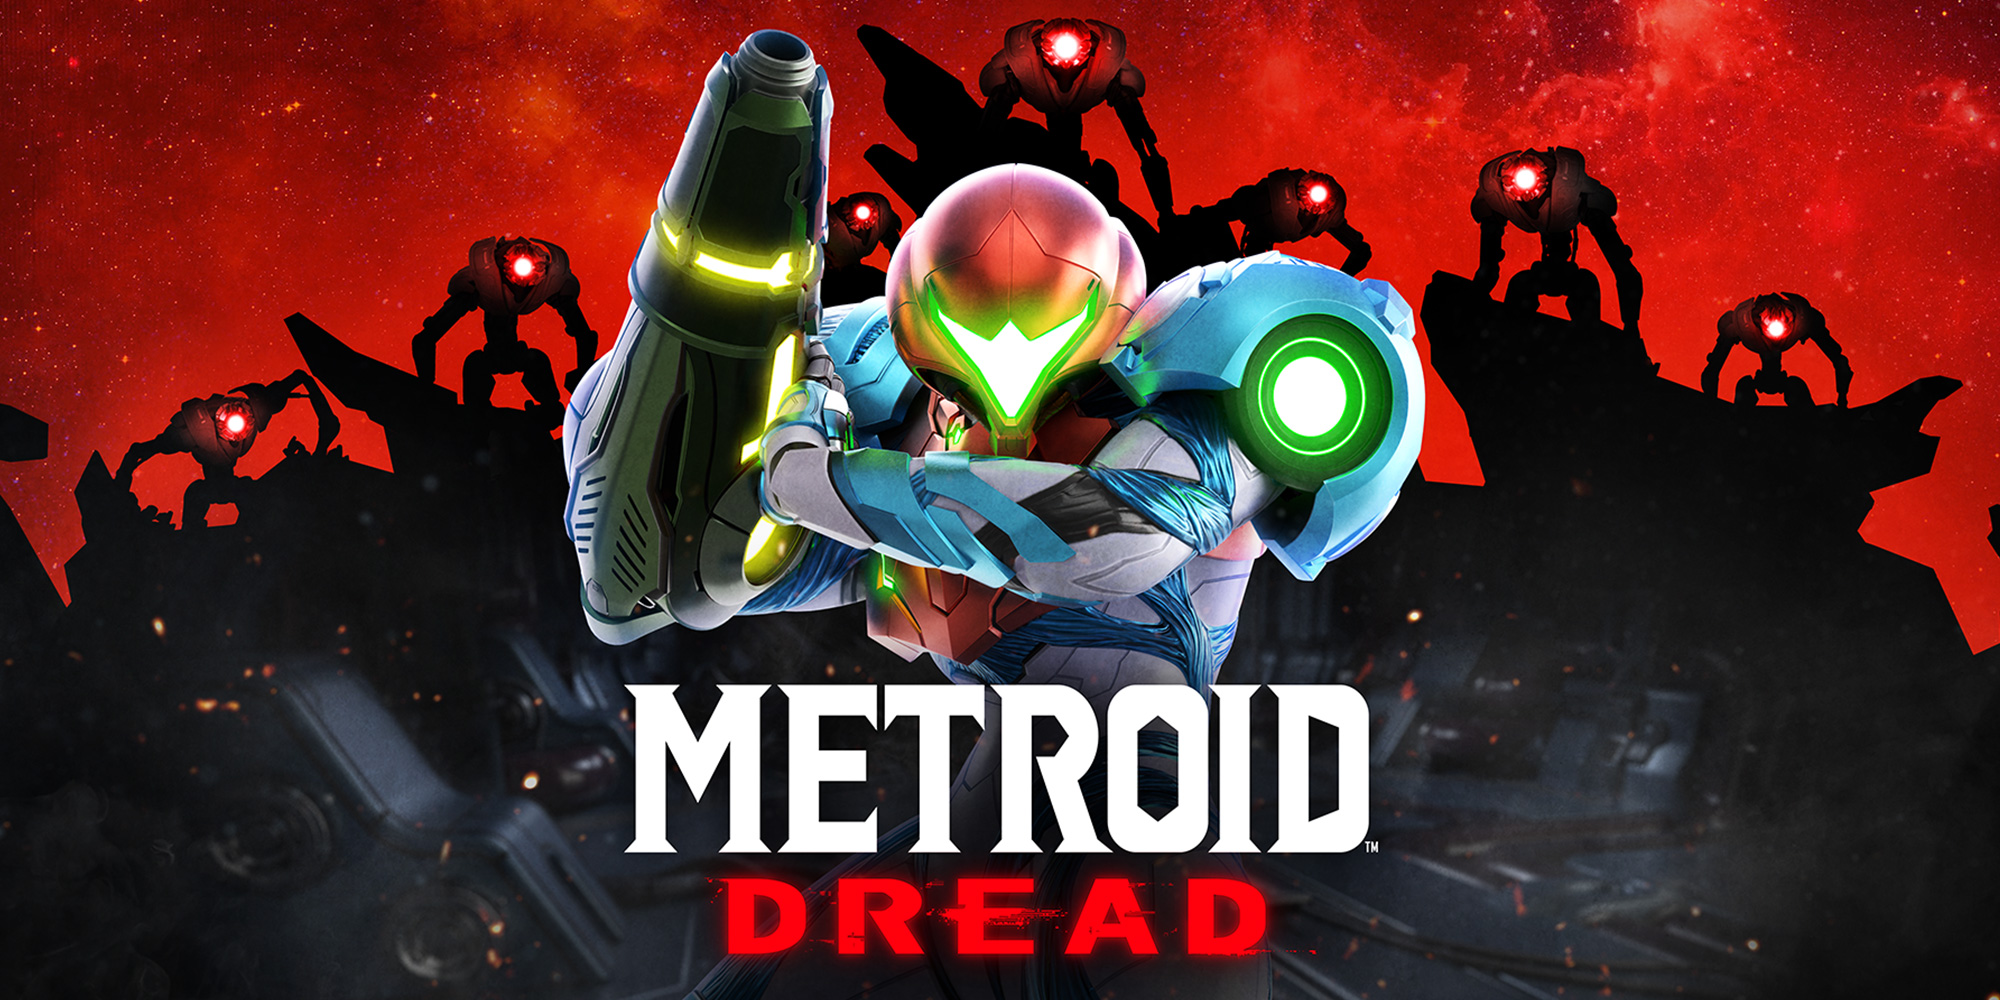 Metroid Dread runs at 4K/60 FPS on PC via the Yuzu And Ryujinx